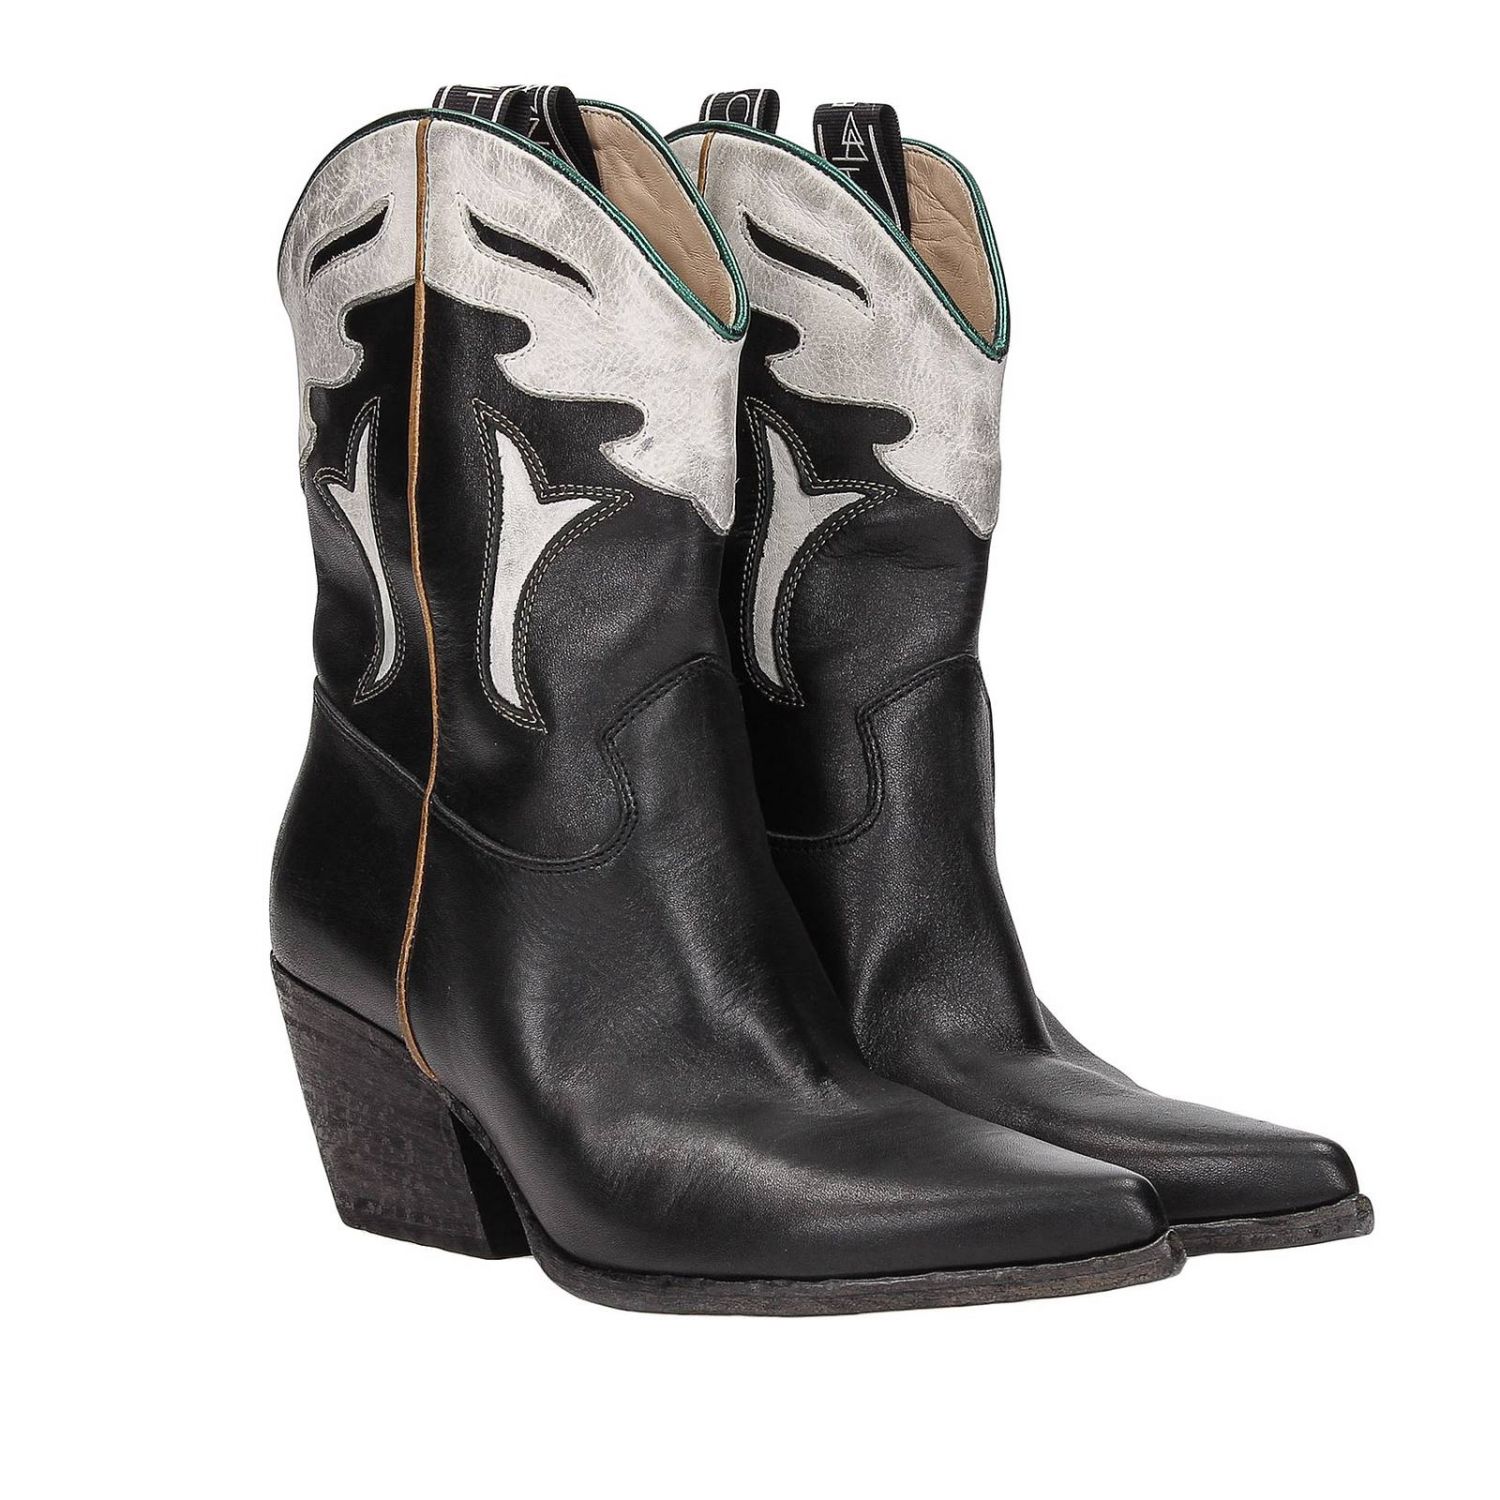 Elena Iachi Outlet: Boots women | Boots Elena Iachi Women Black | Boots ...